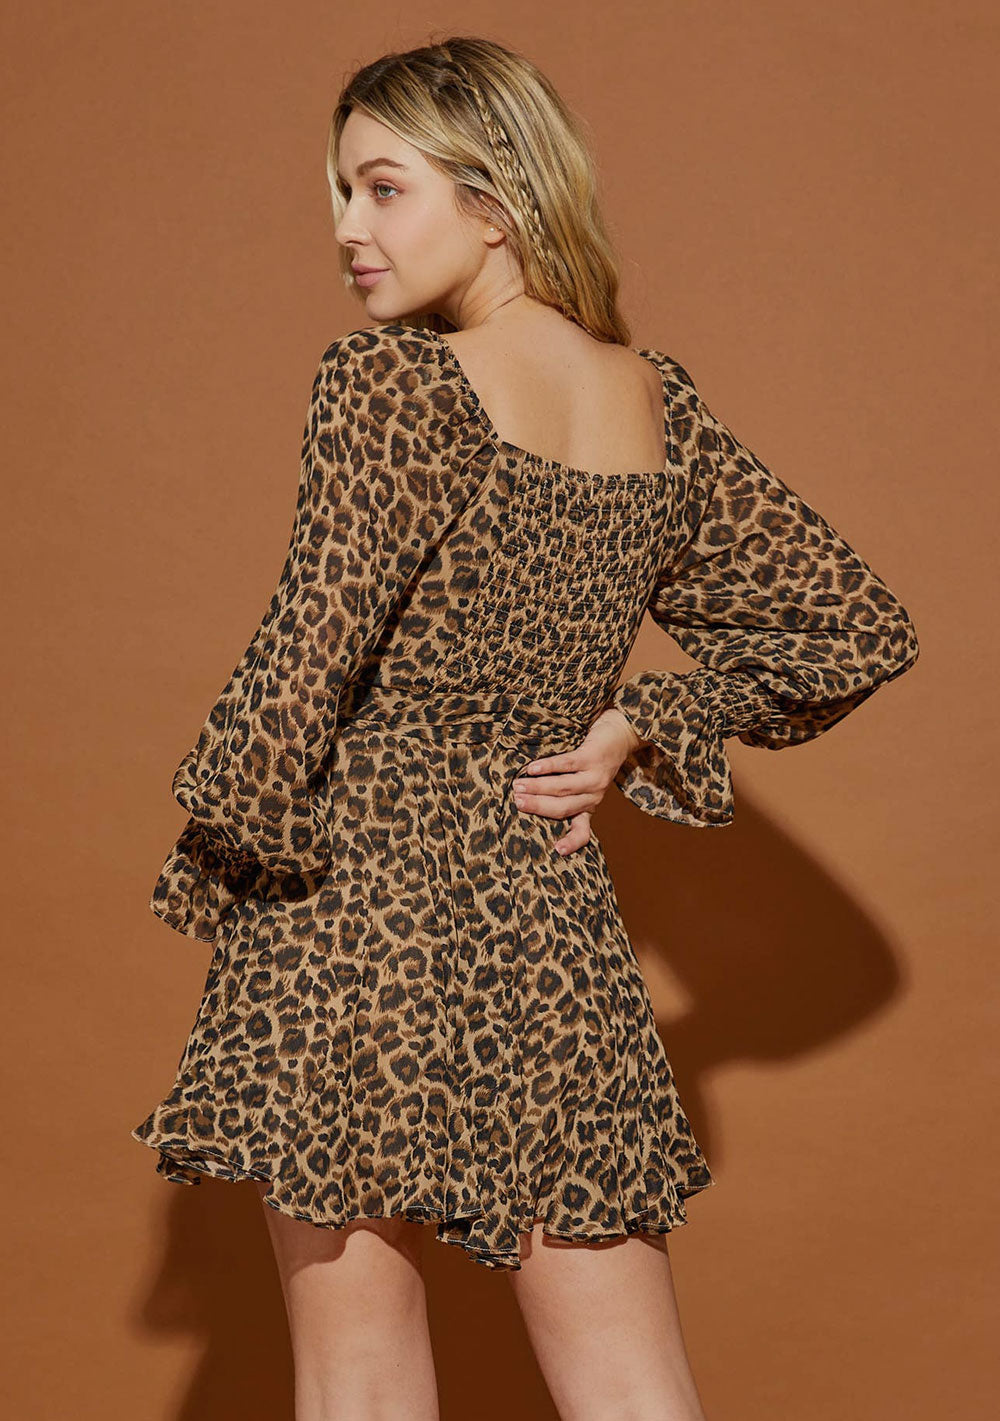 ♡ Wickelkleid mit Leopardenprint